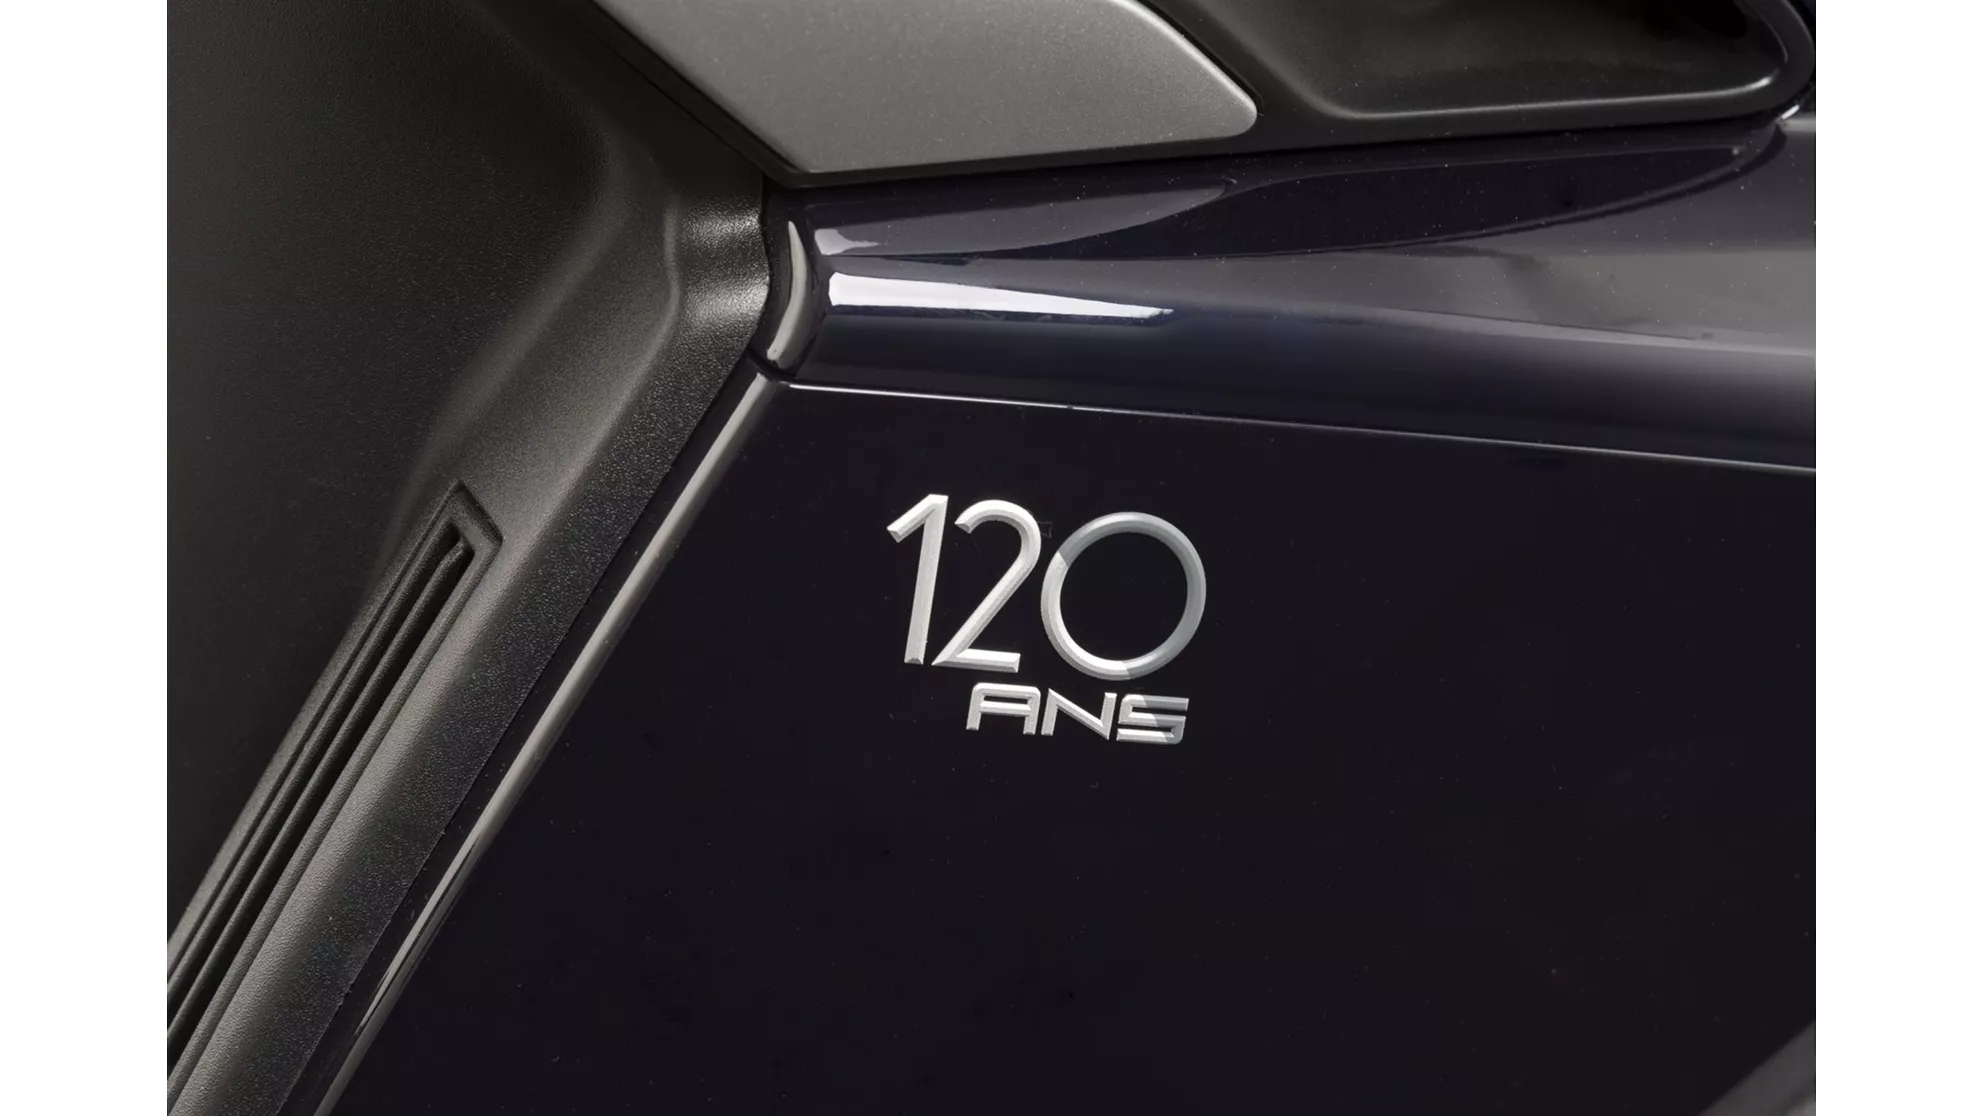 Peugeot Metropolis 120 ans - Slika 1